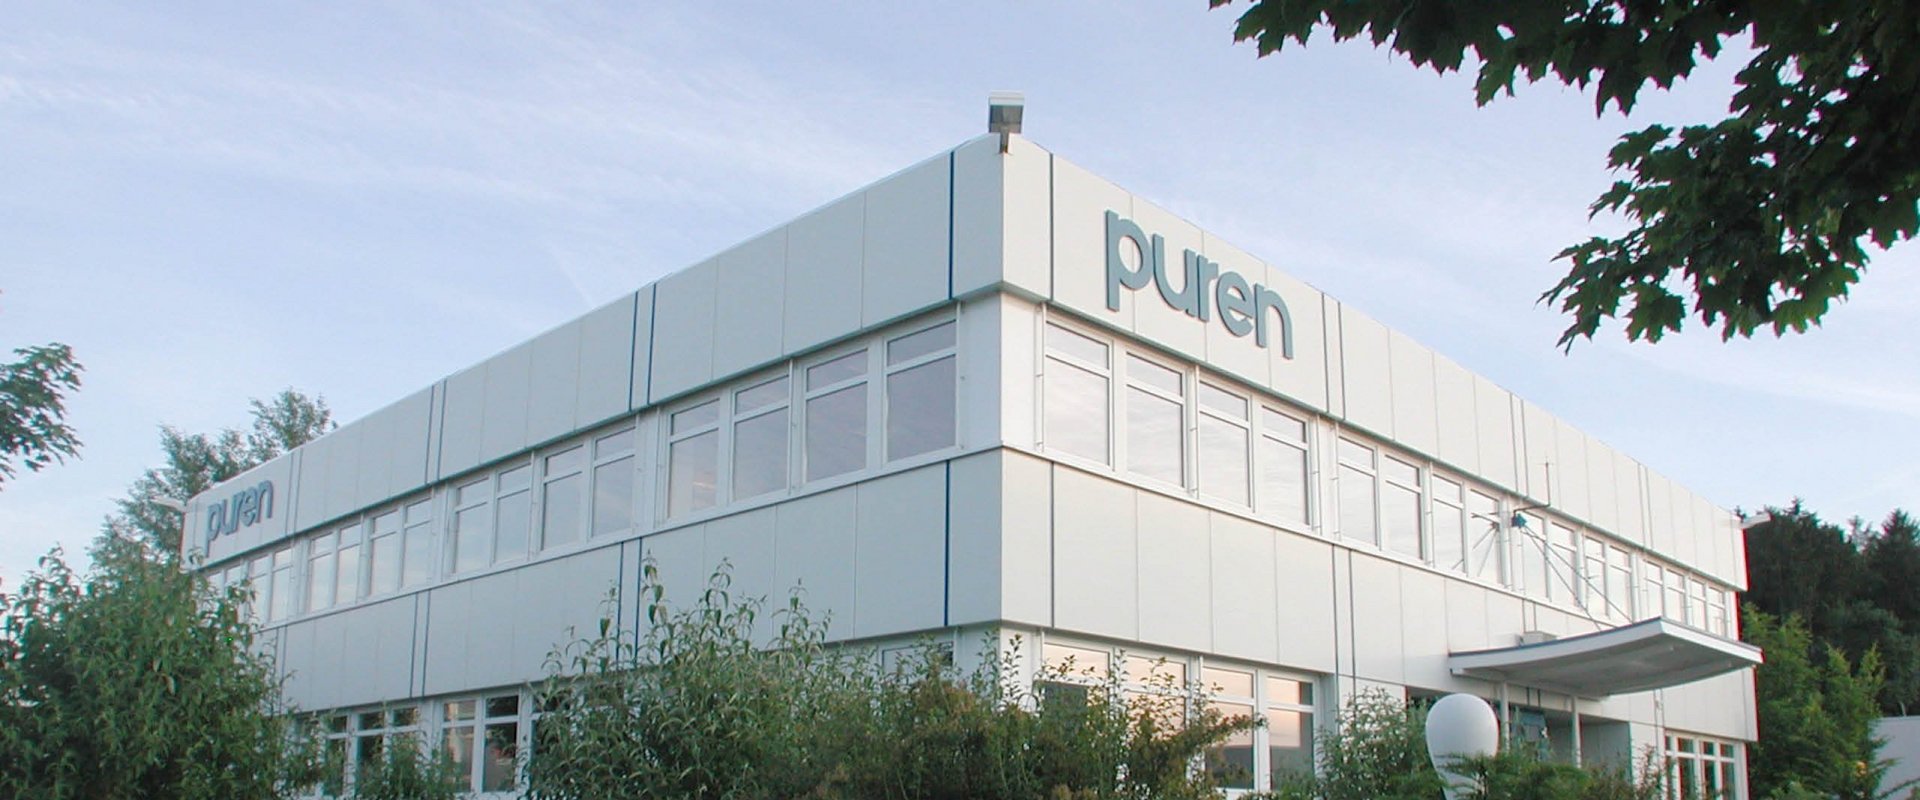 The puren administration building in Überlingen on Lake Constance